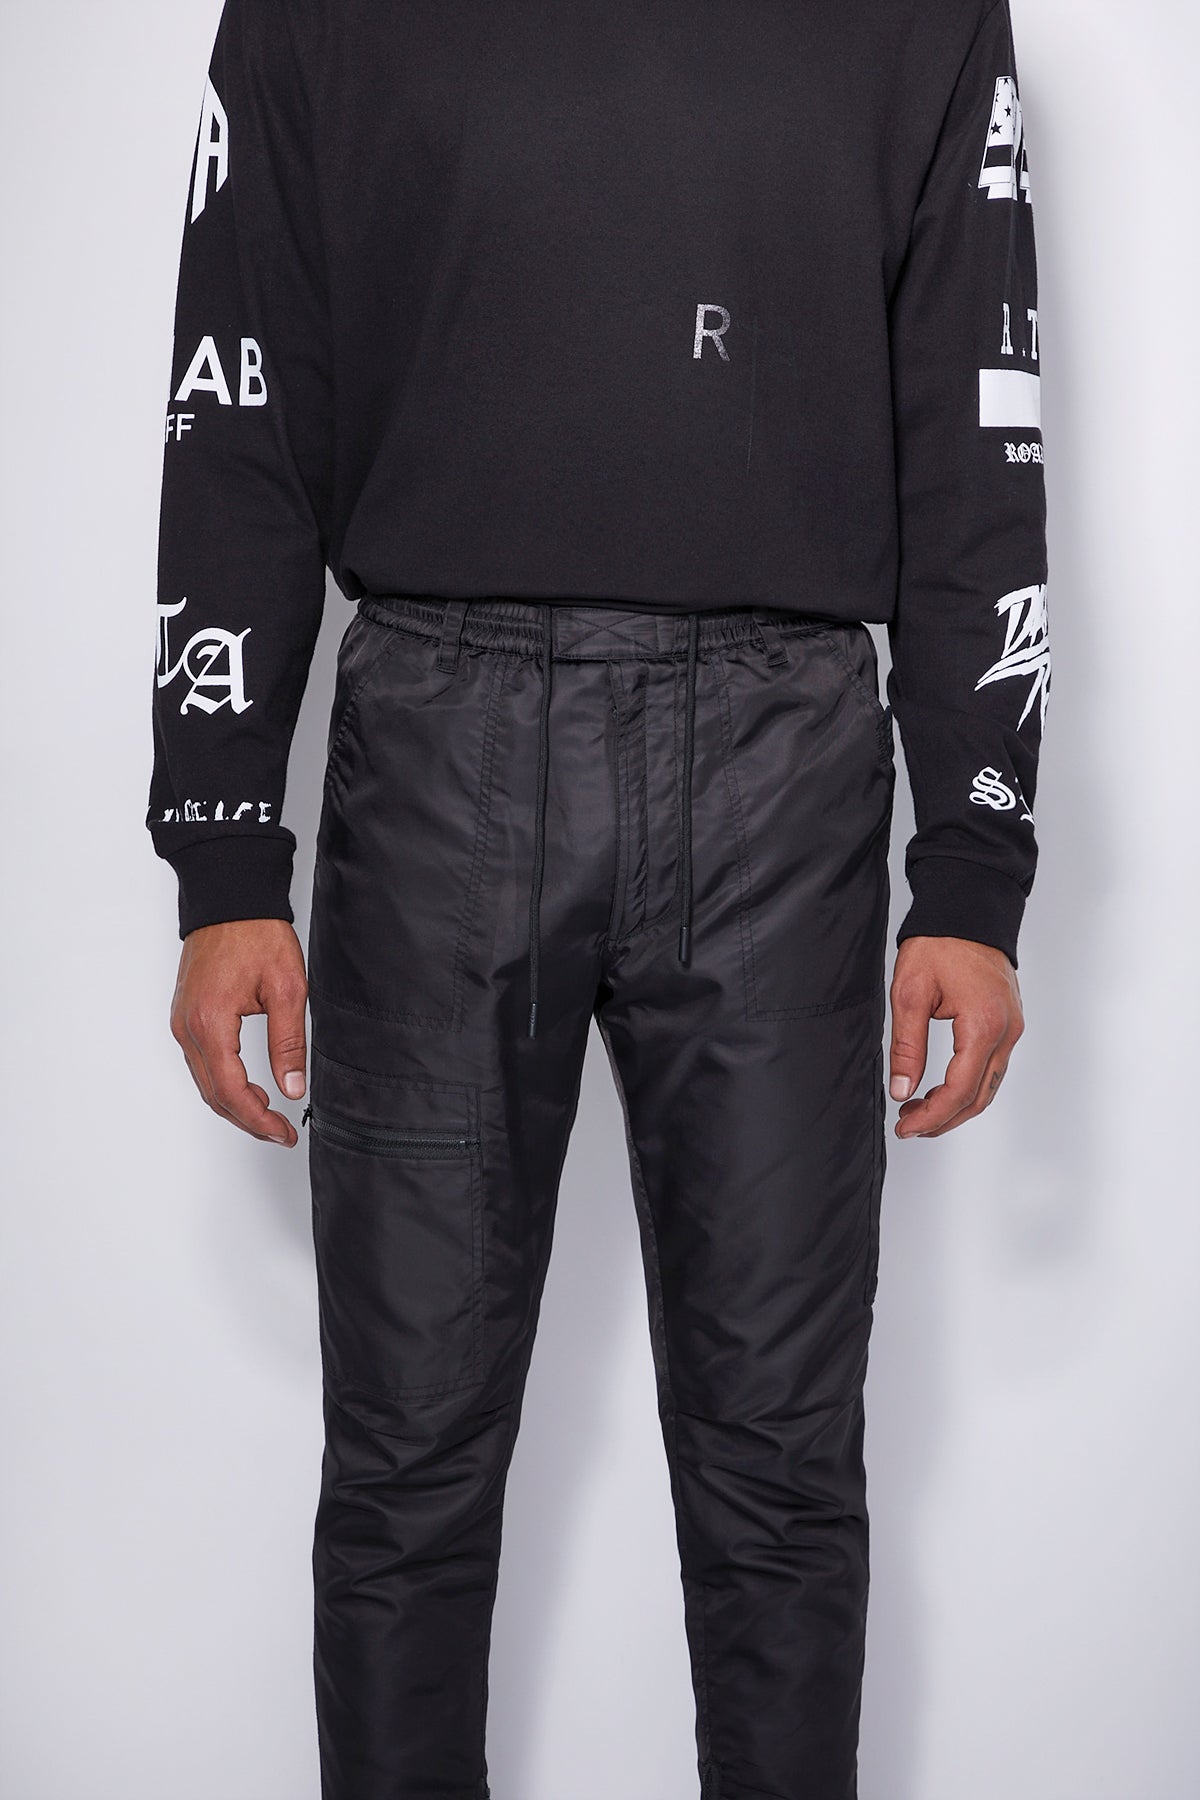 MENS BLACK JOGGER PANTS | RTA CLOTHING